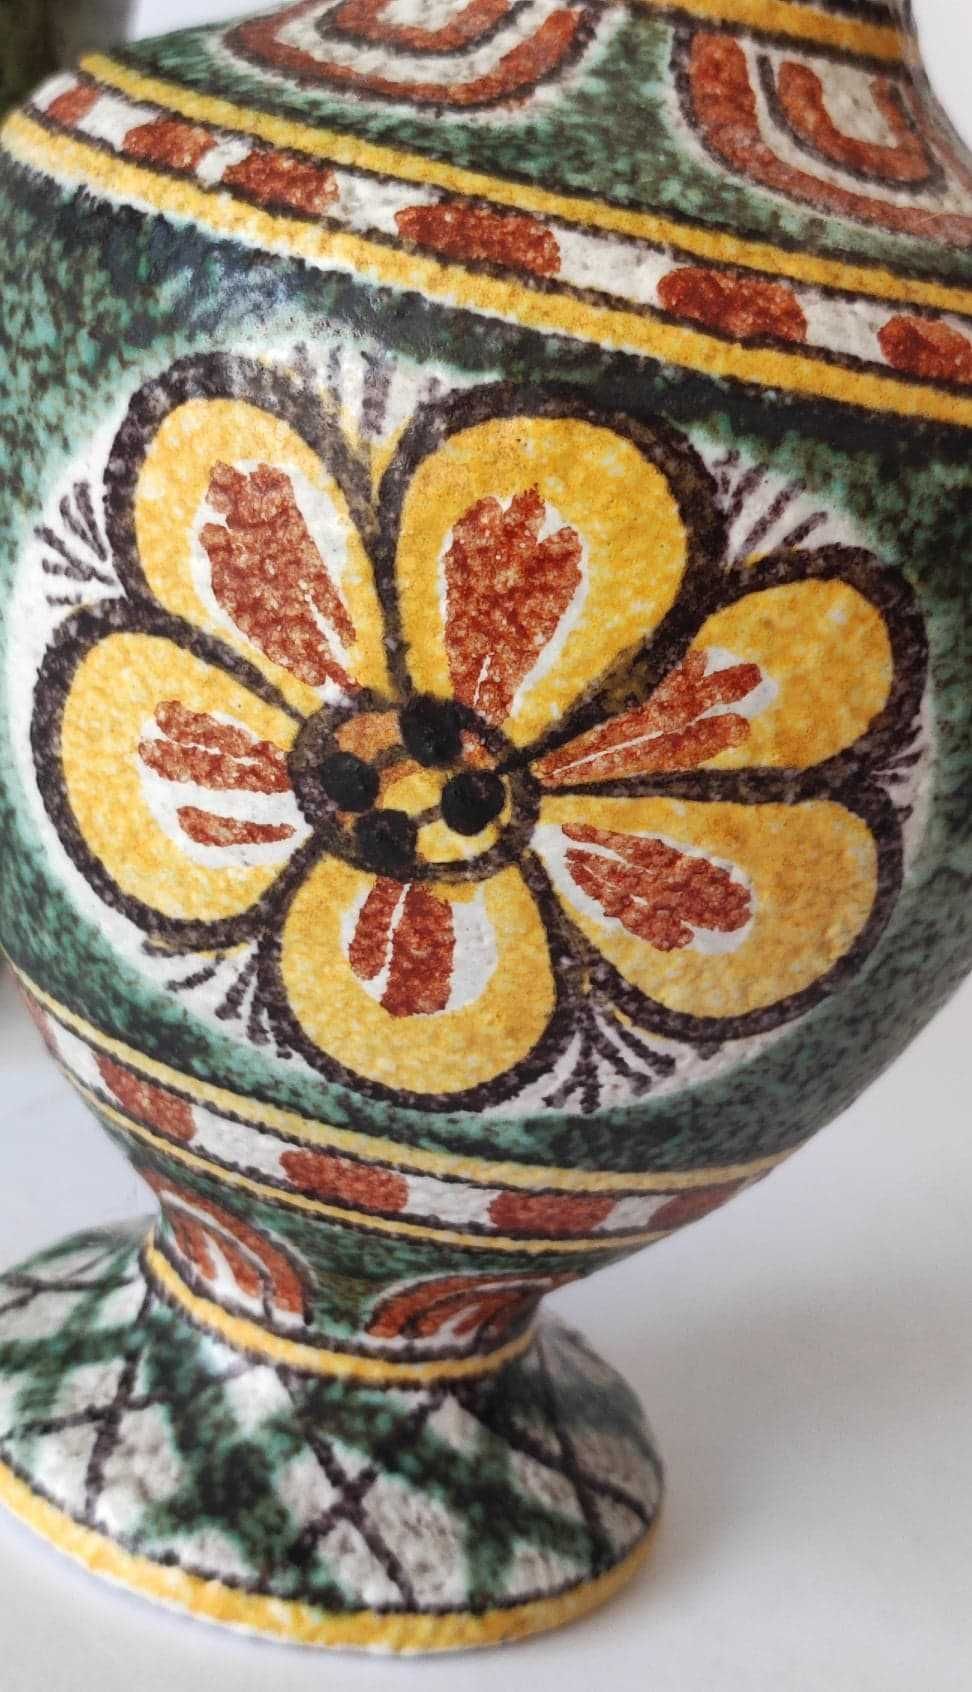 Stary ceramiczny wazon, dekor "Kairo", Ruscha 311/4, Design WGP